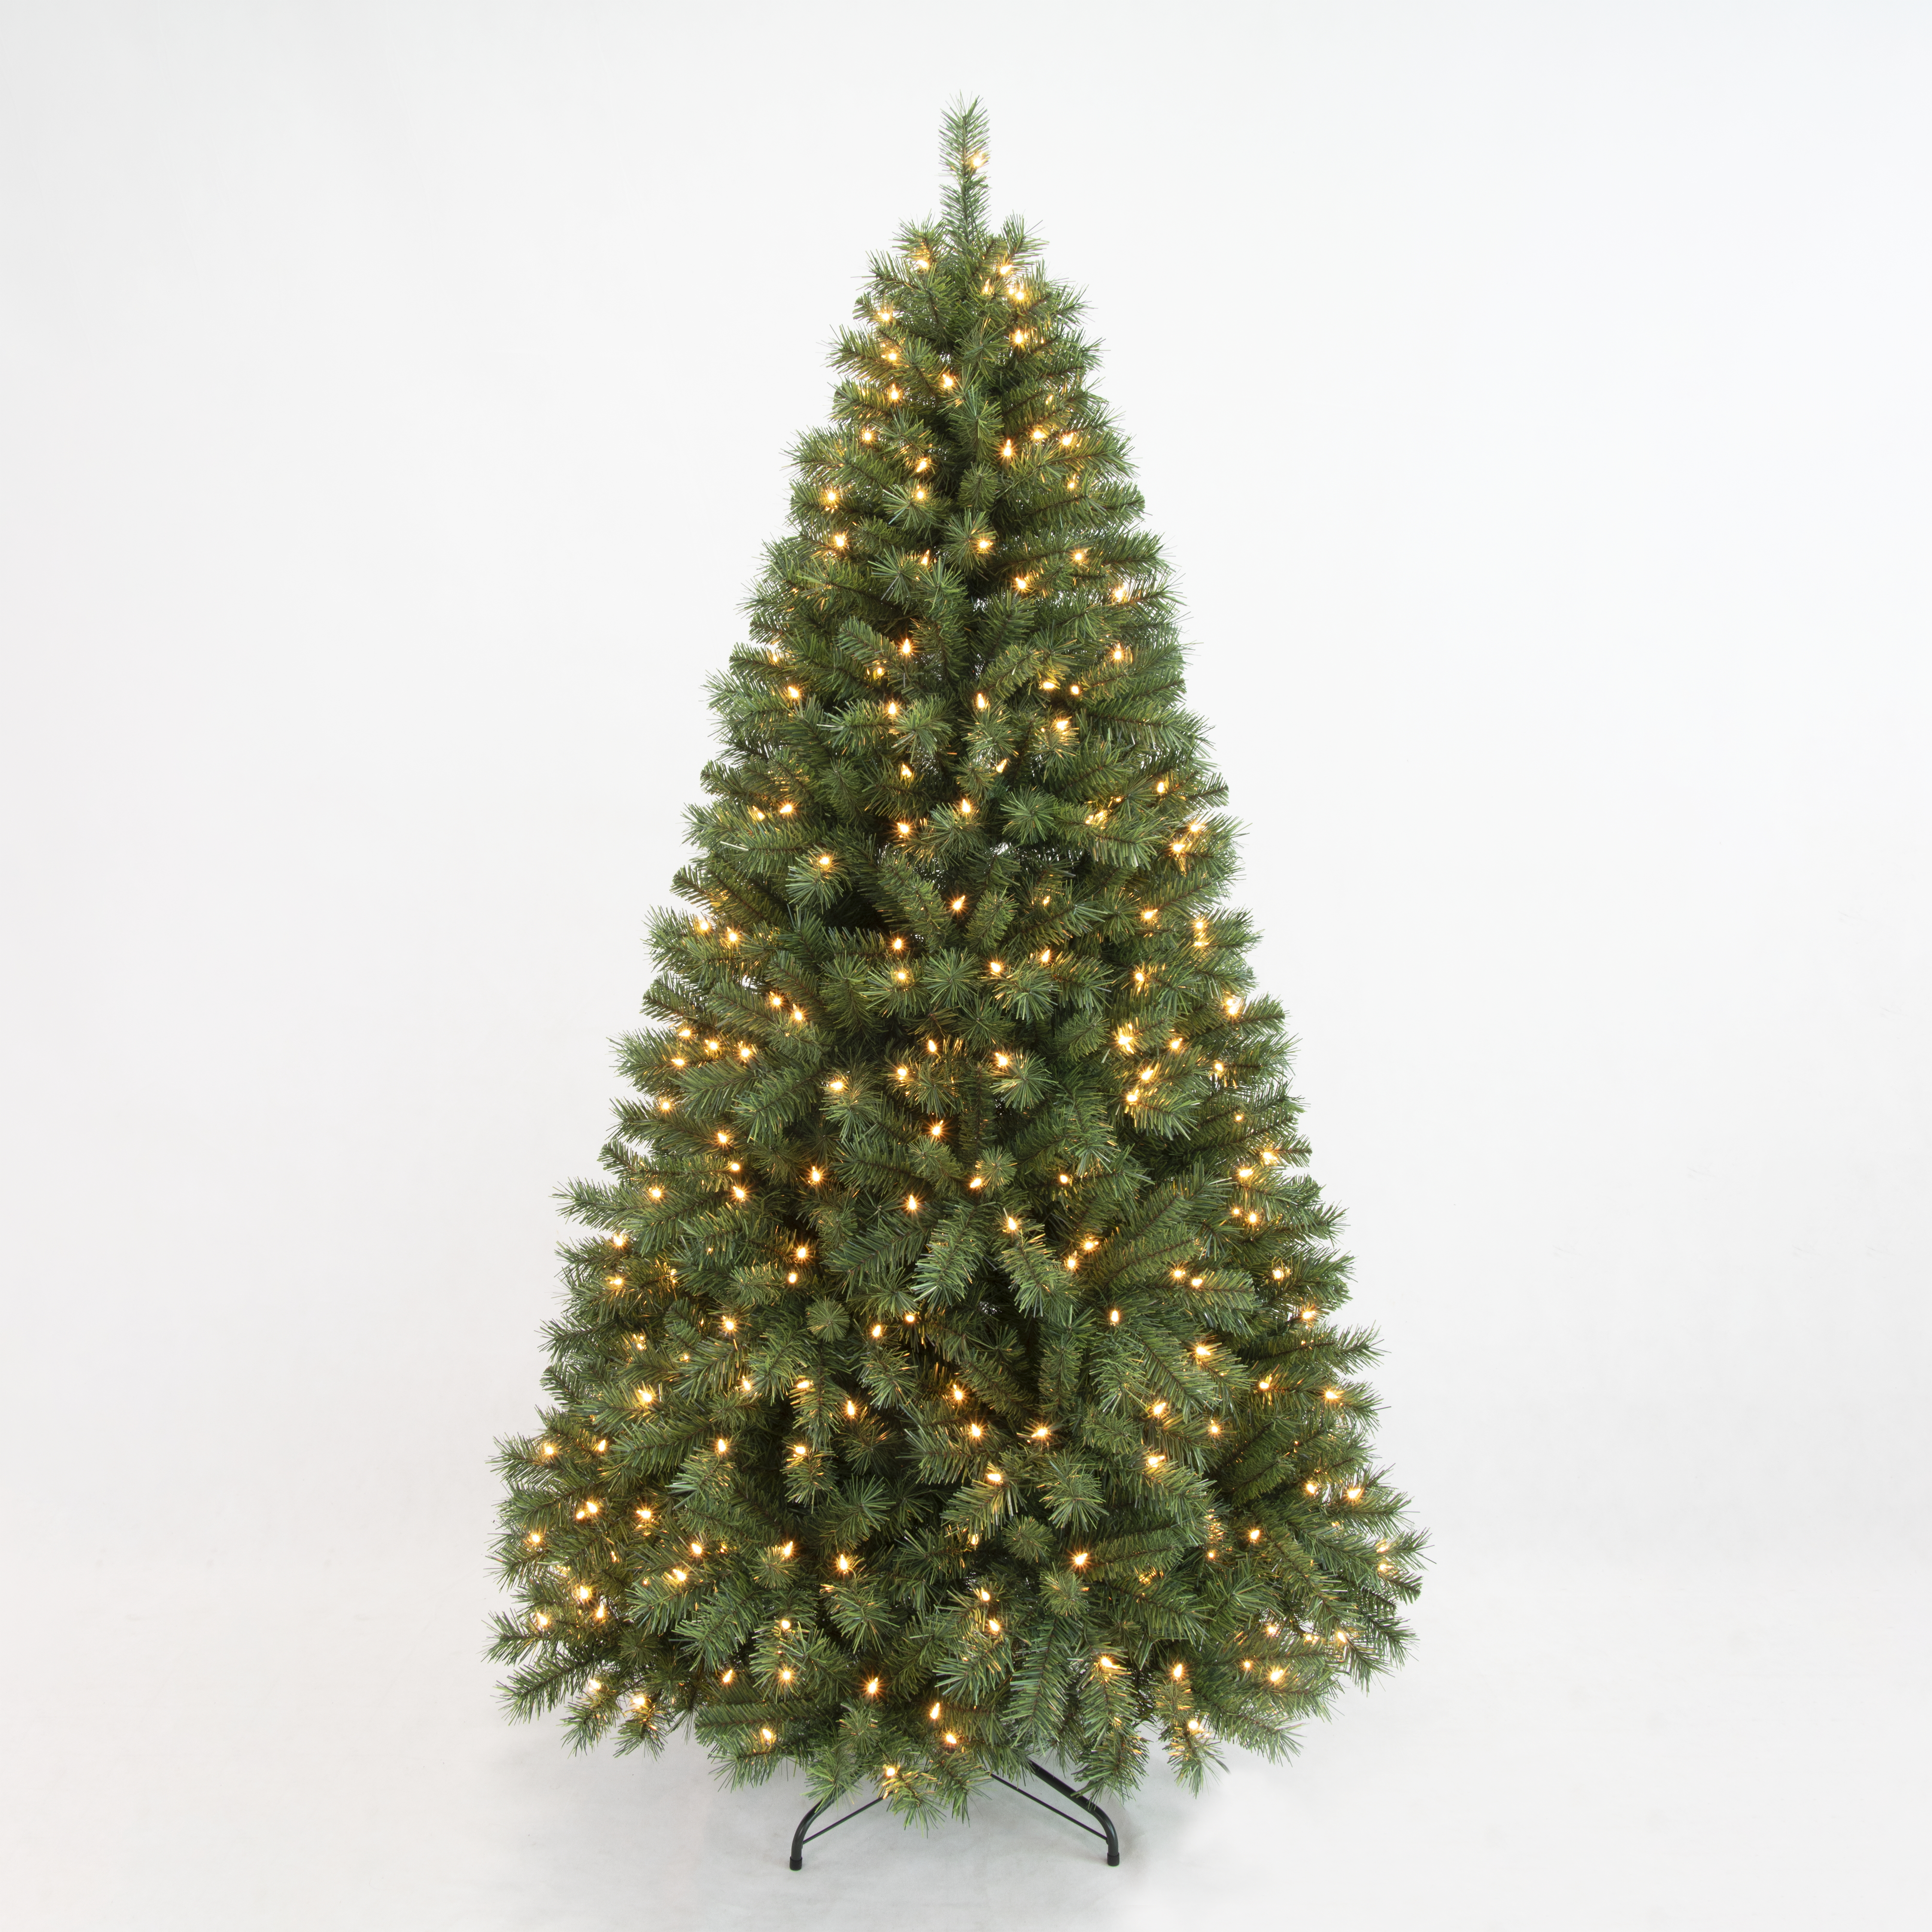 PINEFIELDS Prelit Christmas Tree 7FT, Artificial Christmas Tree with Lights, Lighted Xmas Tree, 400 UL Clear Lights, PVC Mixed Tips, Hinge, Metal Base